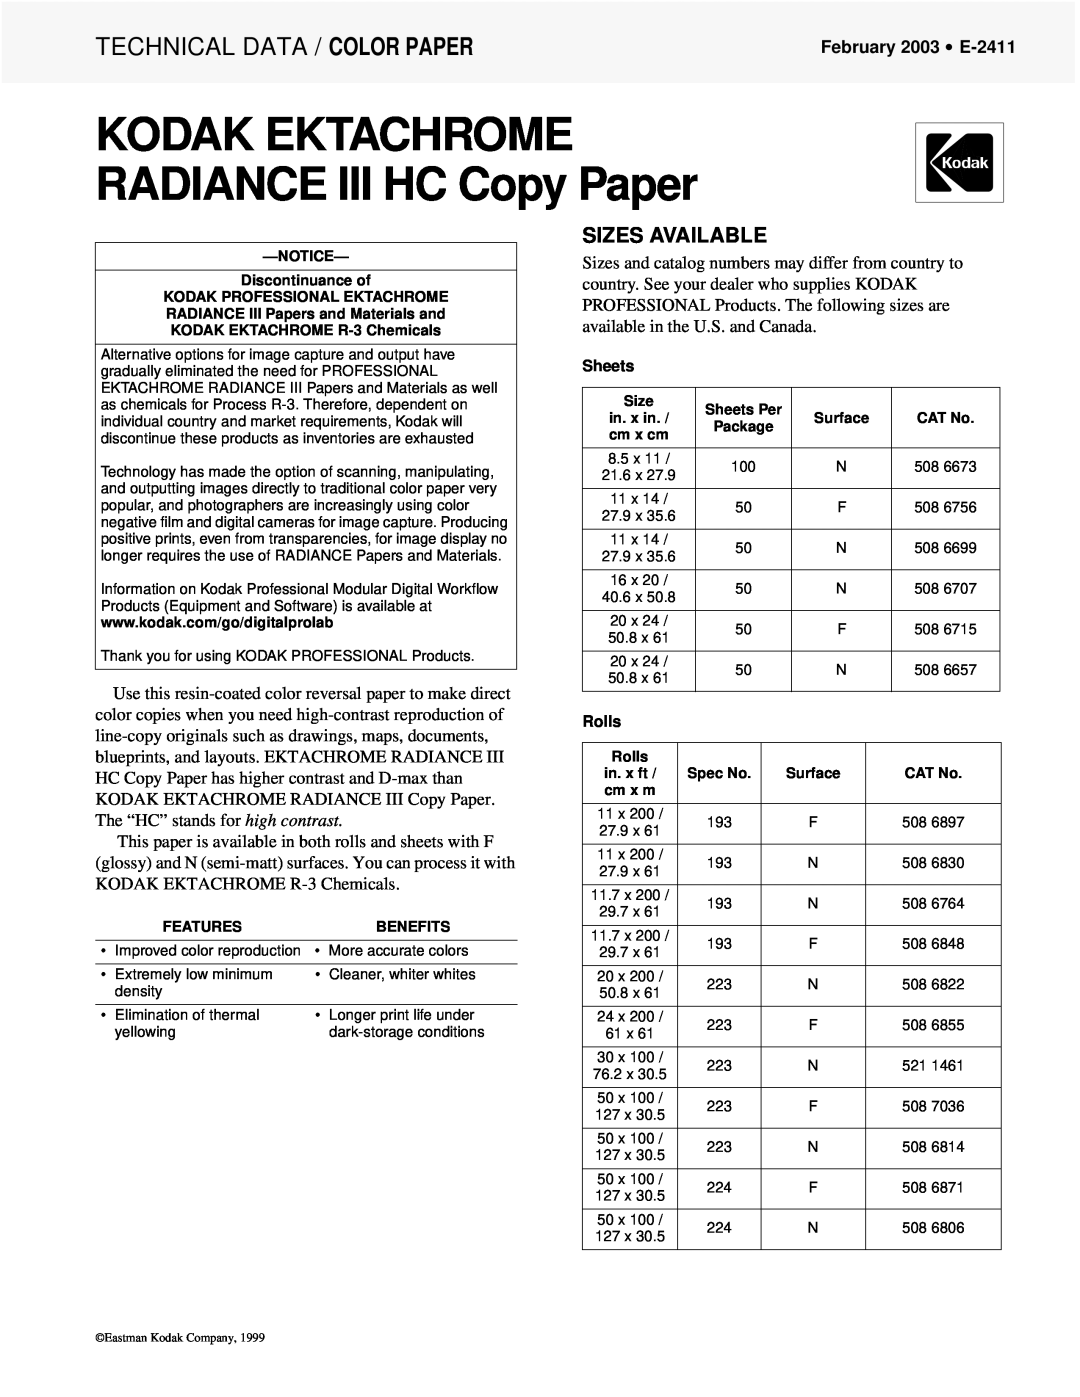 Kodak manual Sizes Available, February 2003 E-2411, KODAK EKTACHROME RADIANCE III HC Copy Paper 